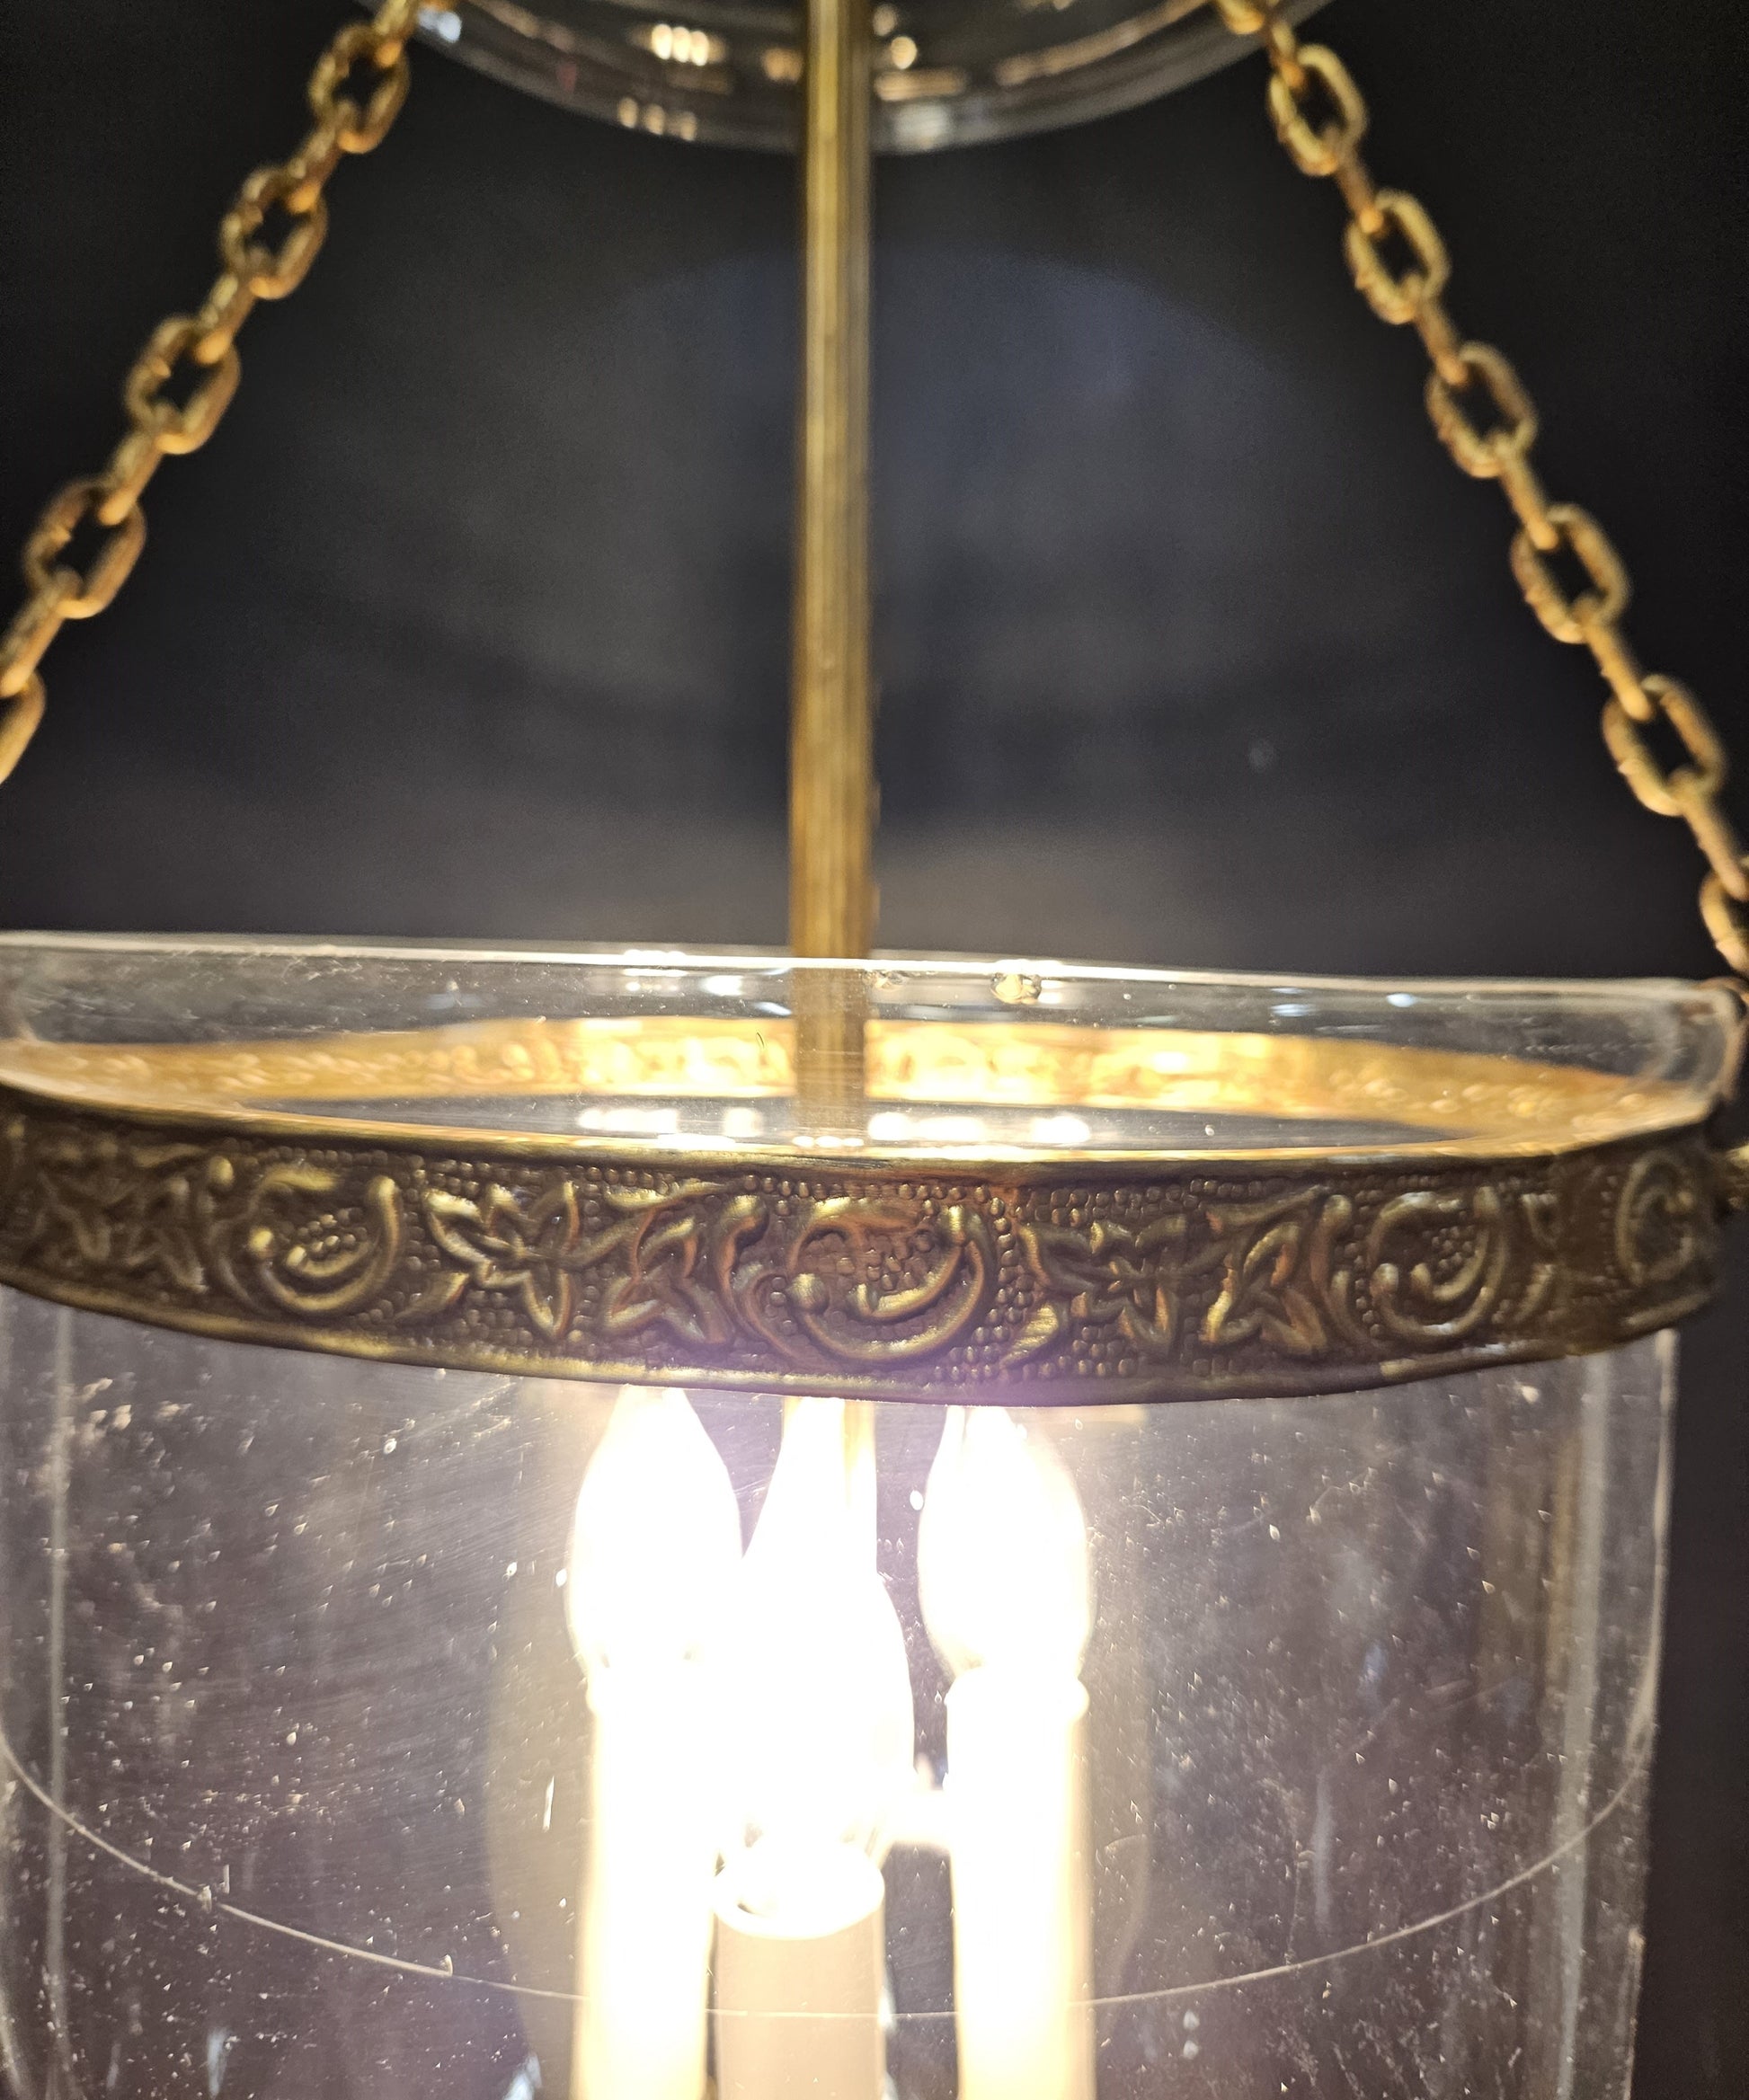 close up showing internal chandelier lit